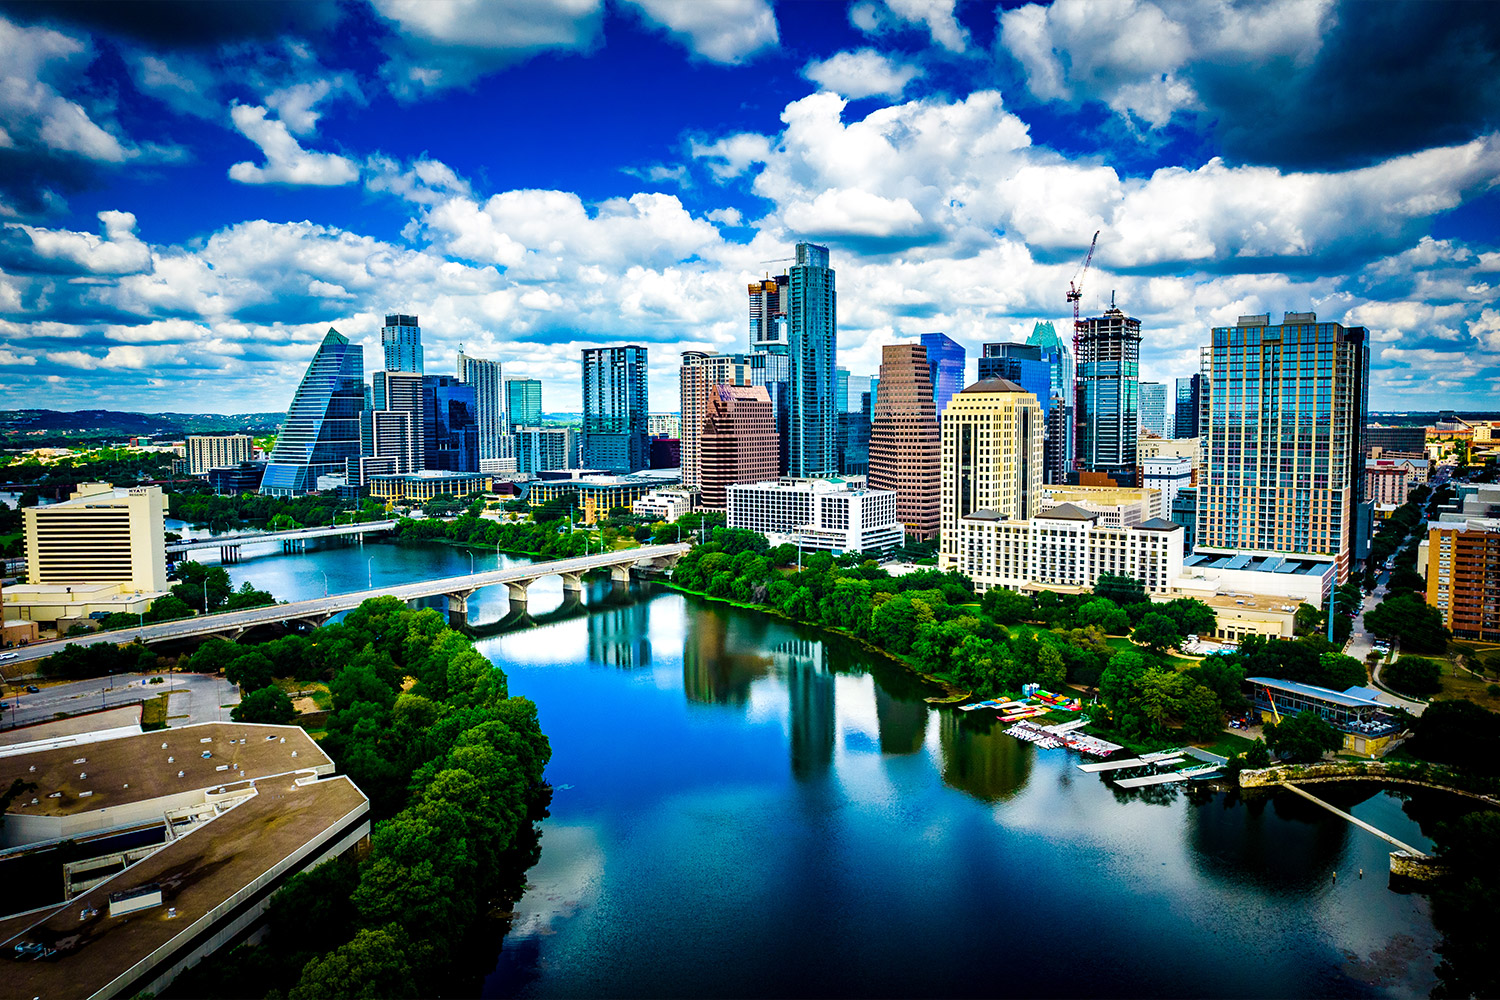 Austin, Texas skyline along the river on a blue sky and cloudy day